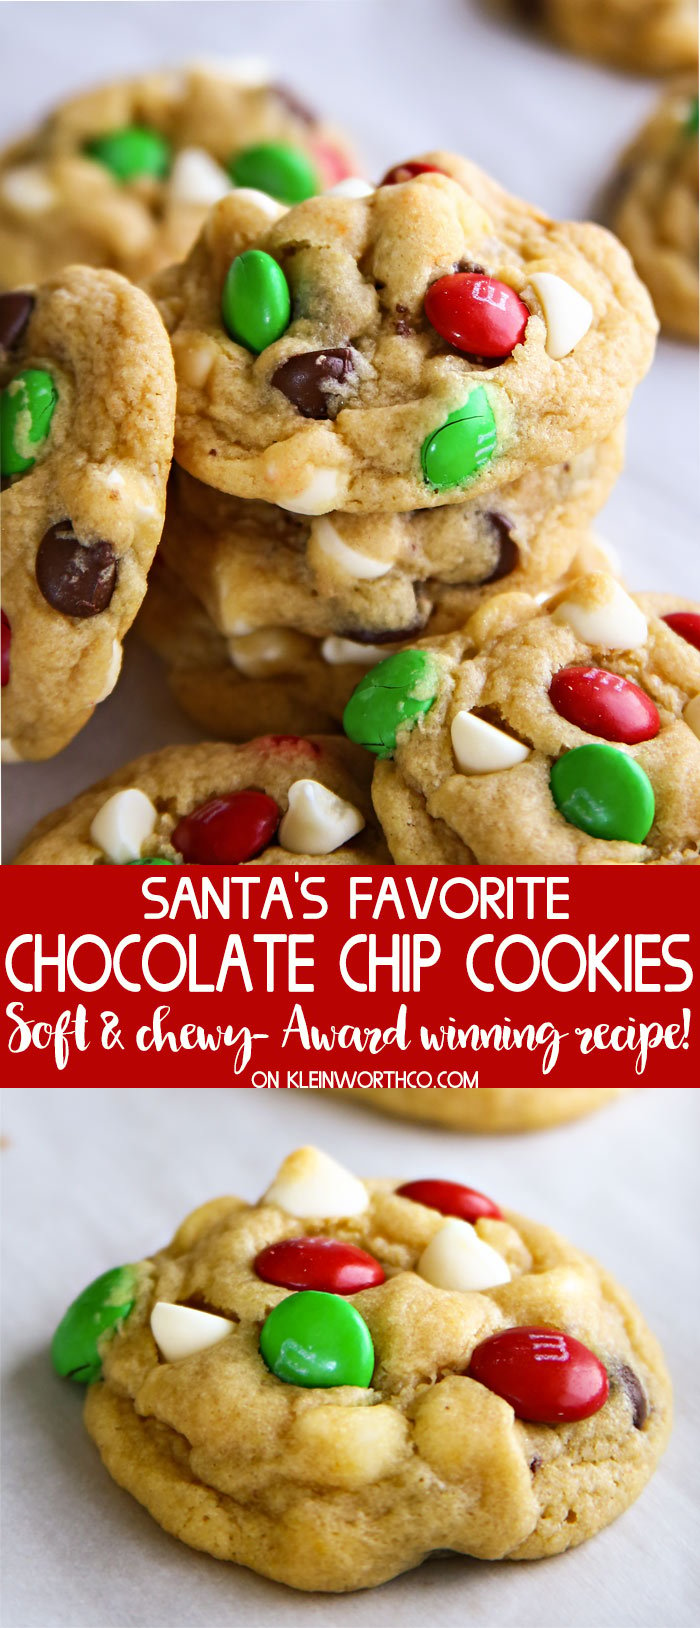 Santa's Favorite Chocolate Chip Cookies recipe